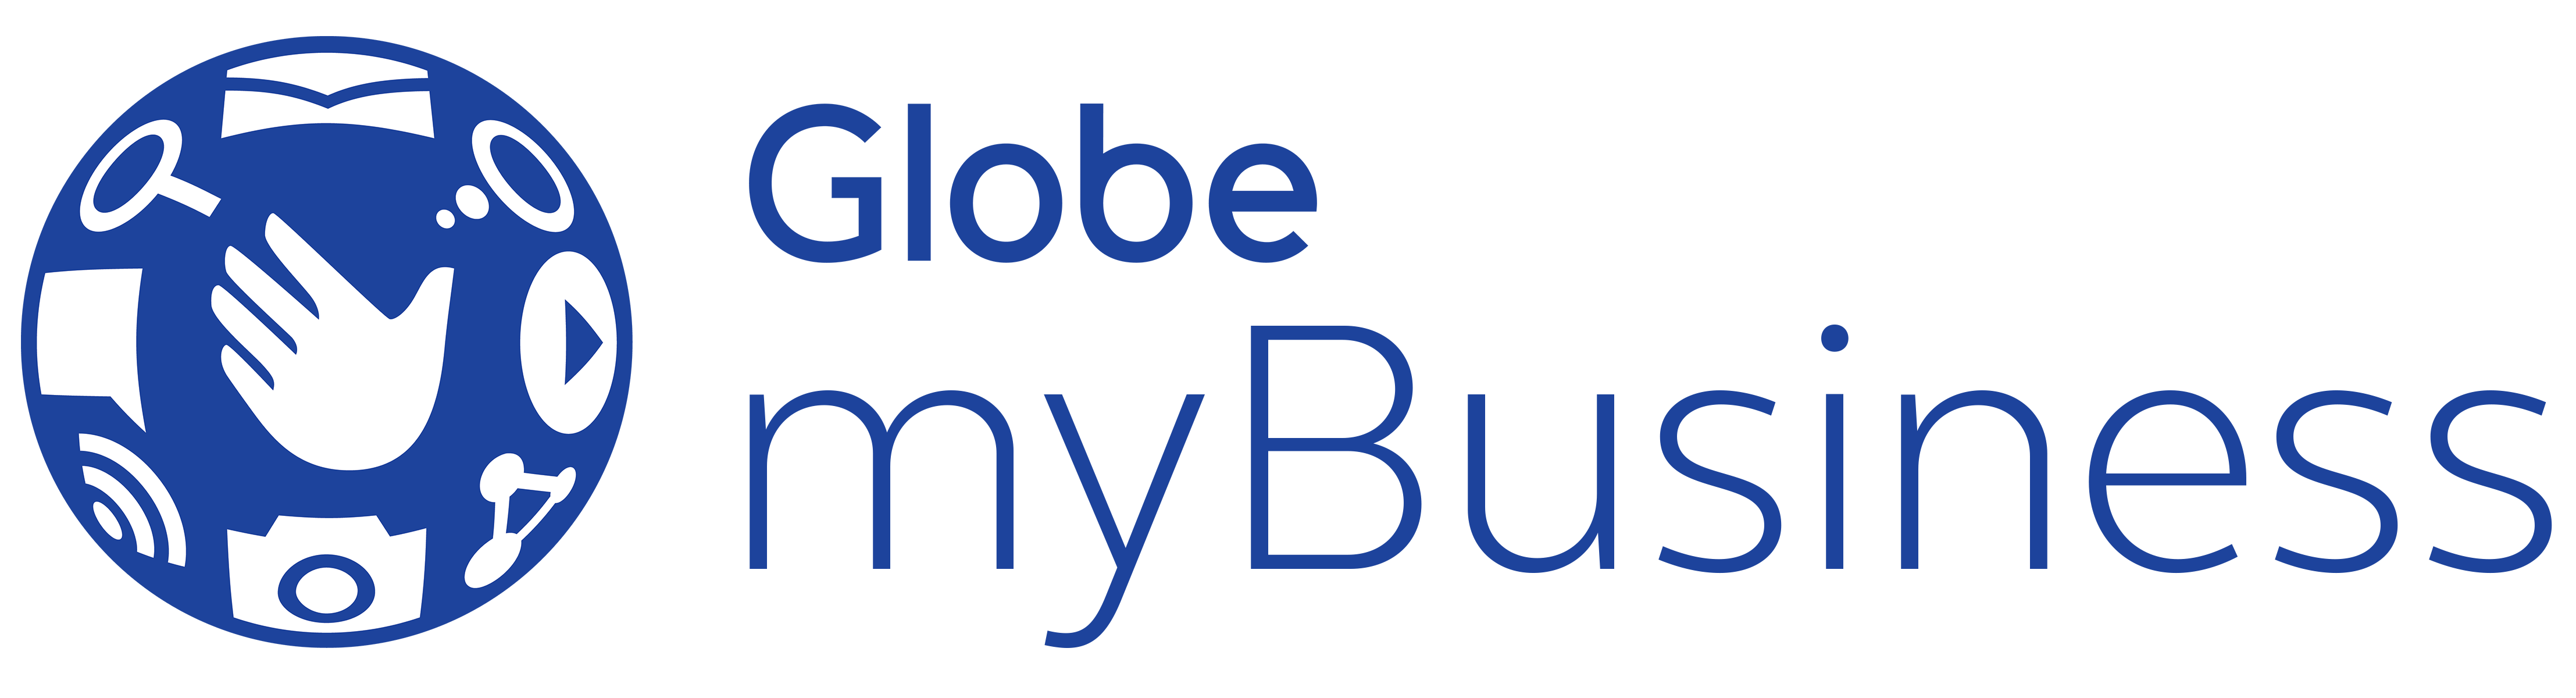 Globe myBusiness Logo 2D POS